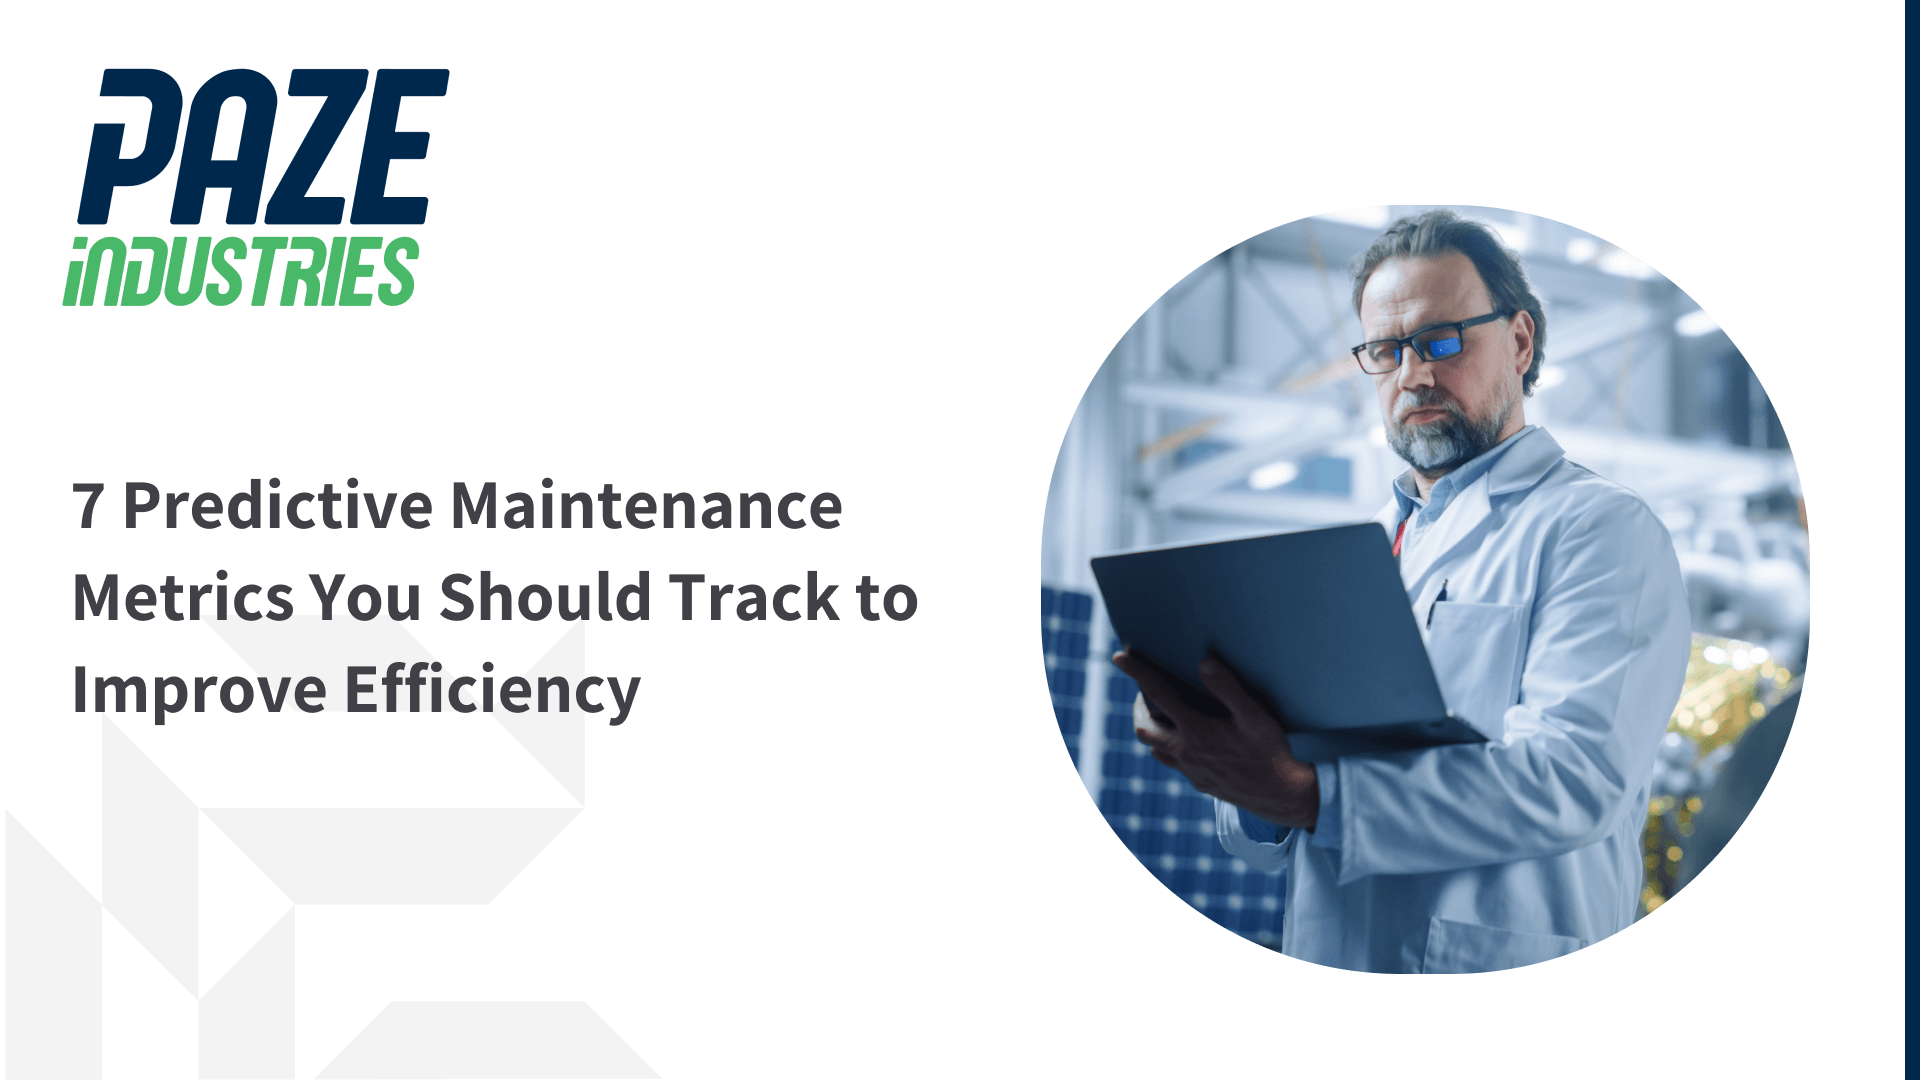 7 Predictive Maintenance Metrics You Should Track to Improve Efficiency